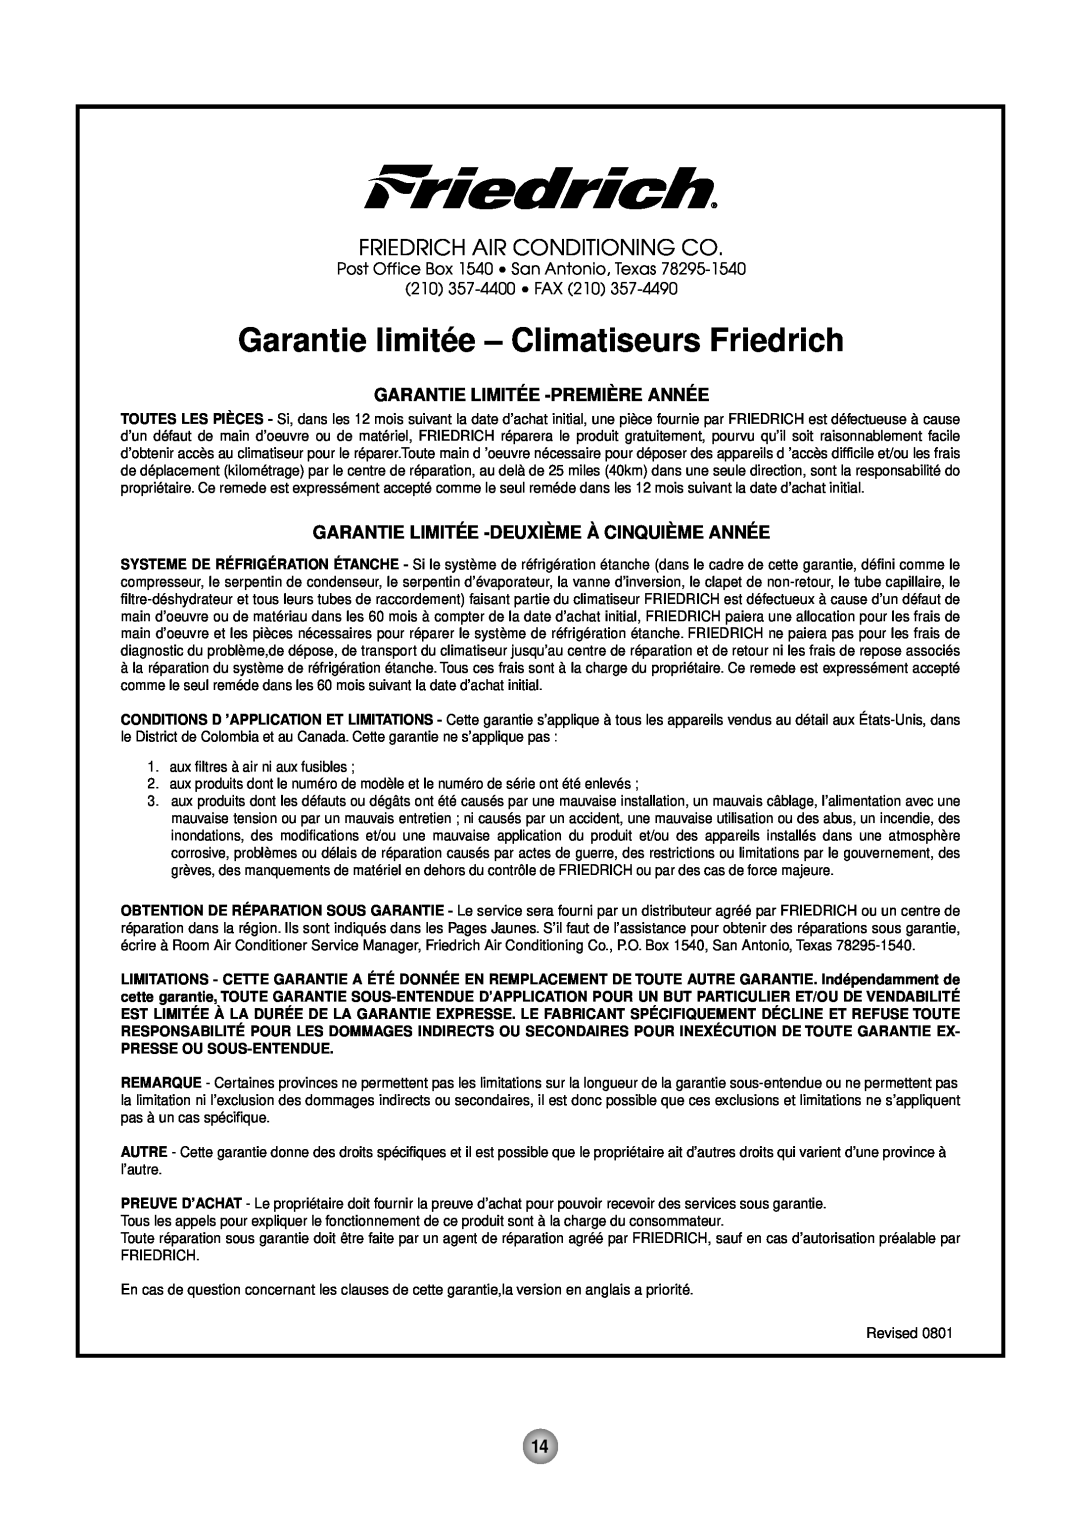 Friedrich CP05 CP Line operation manual Garantie limité e - Climatiseurs Friedrich, Friedrich Air Conditioning Co 